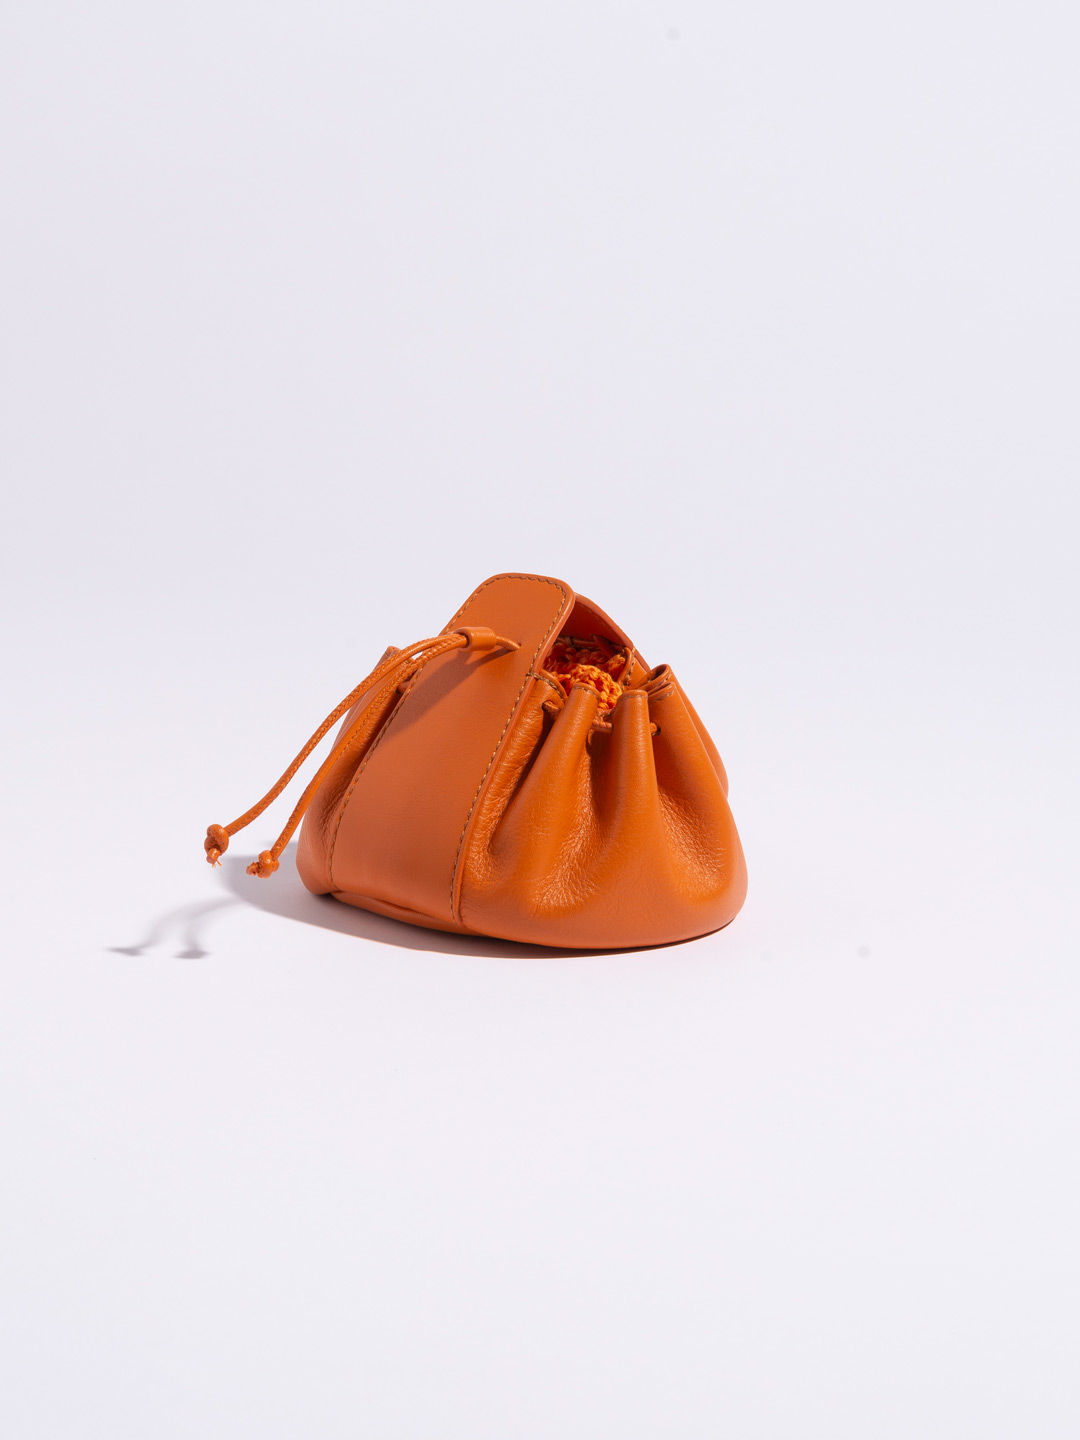 Fruita Packable Knitted Cotton Net Bag - Orange